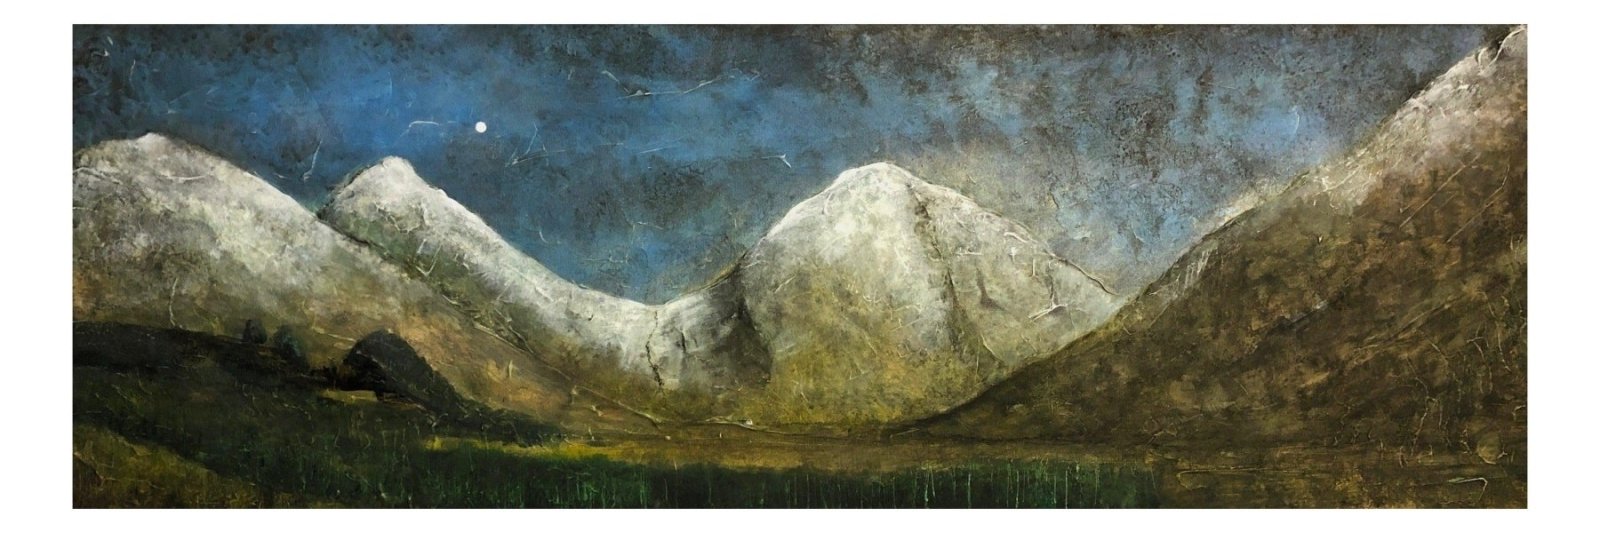 Glencoe Moonlit Snow-Panoramic Prints-Glencoe Art Gallery-Paintings, Prints, Homeware, Art Gifts From Scotland By Scottish Artist Kevin Hunter